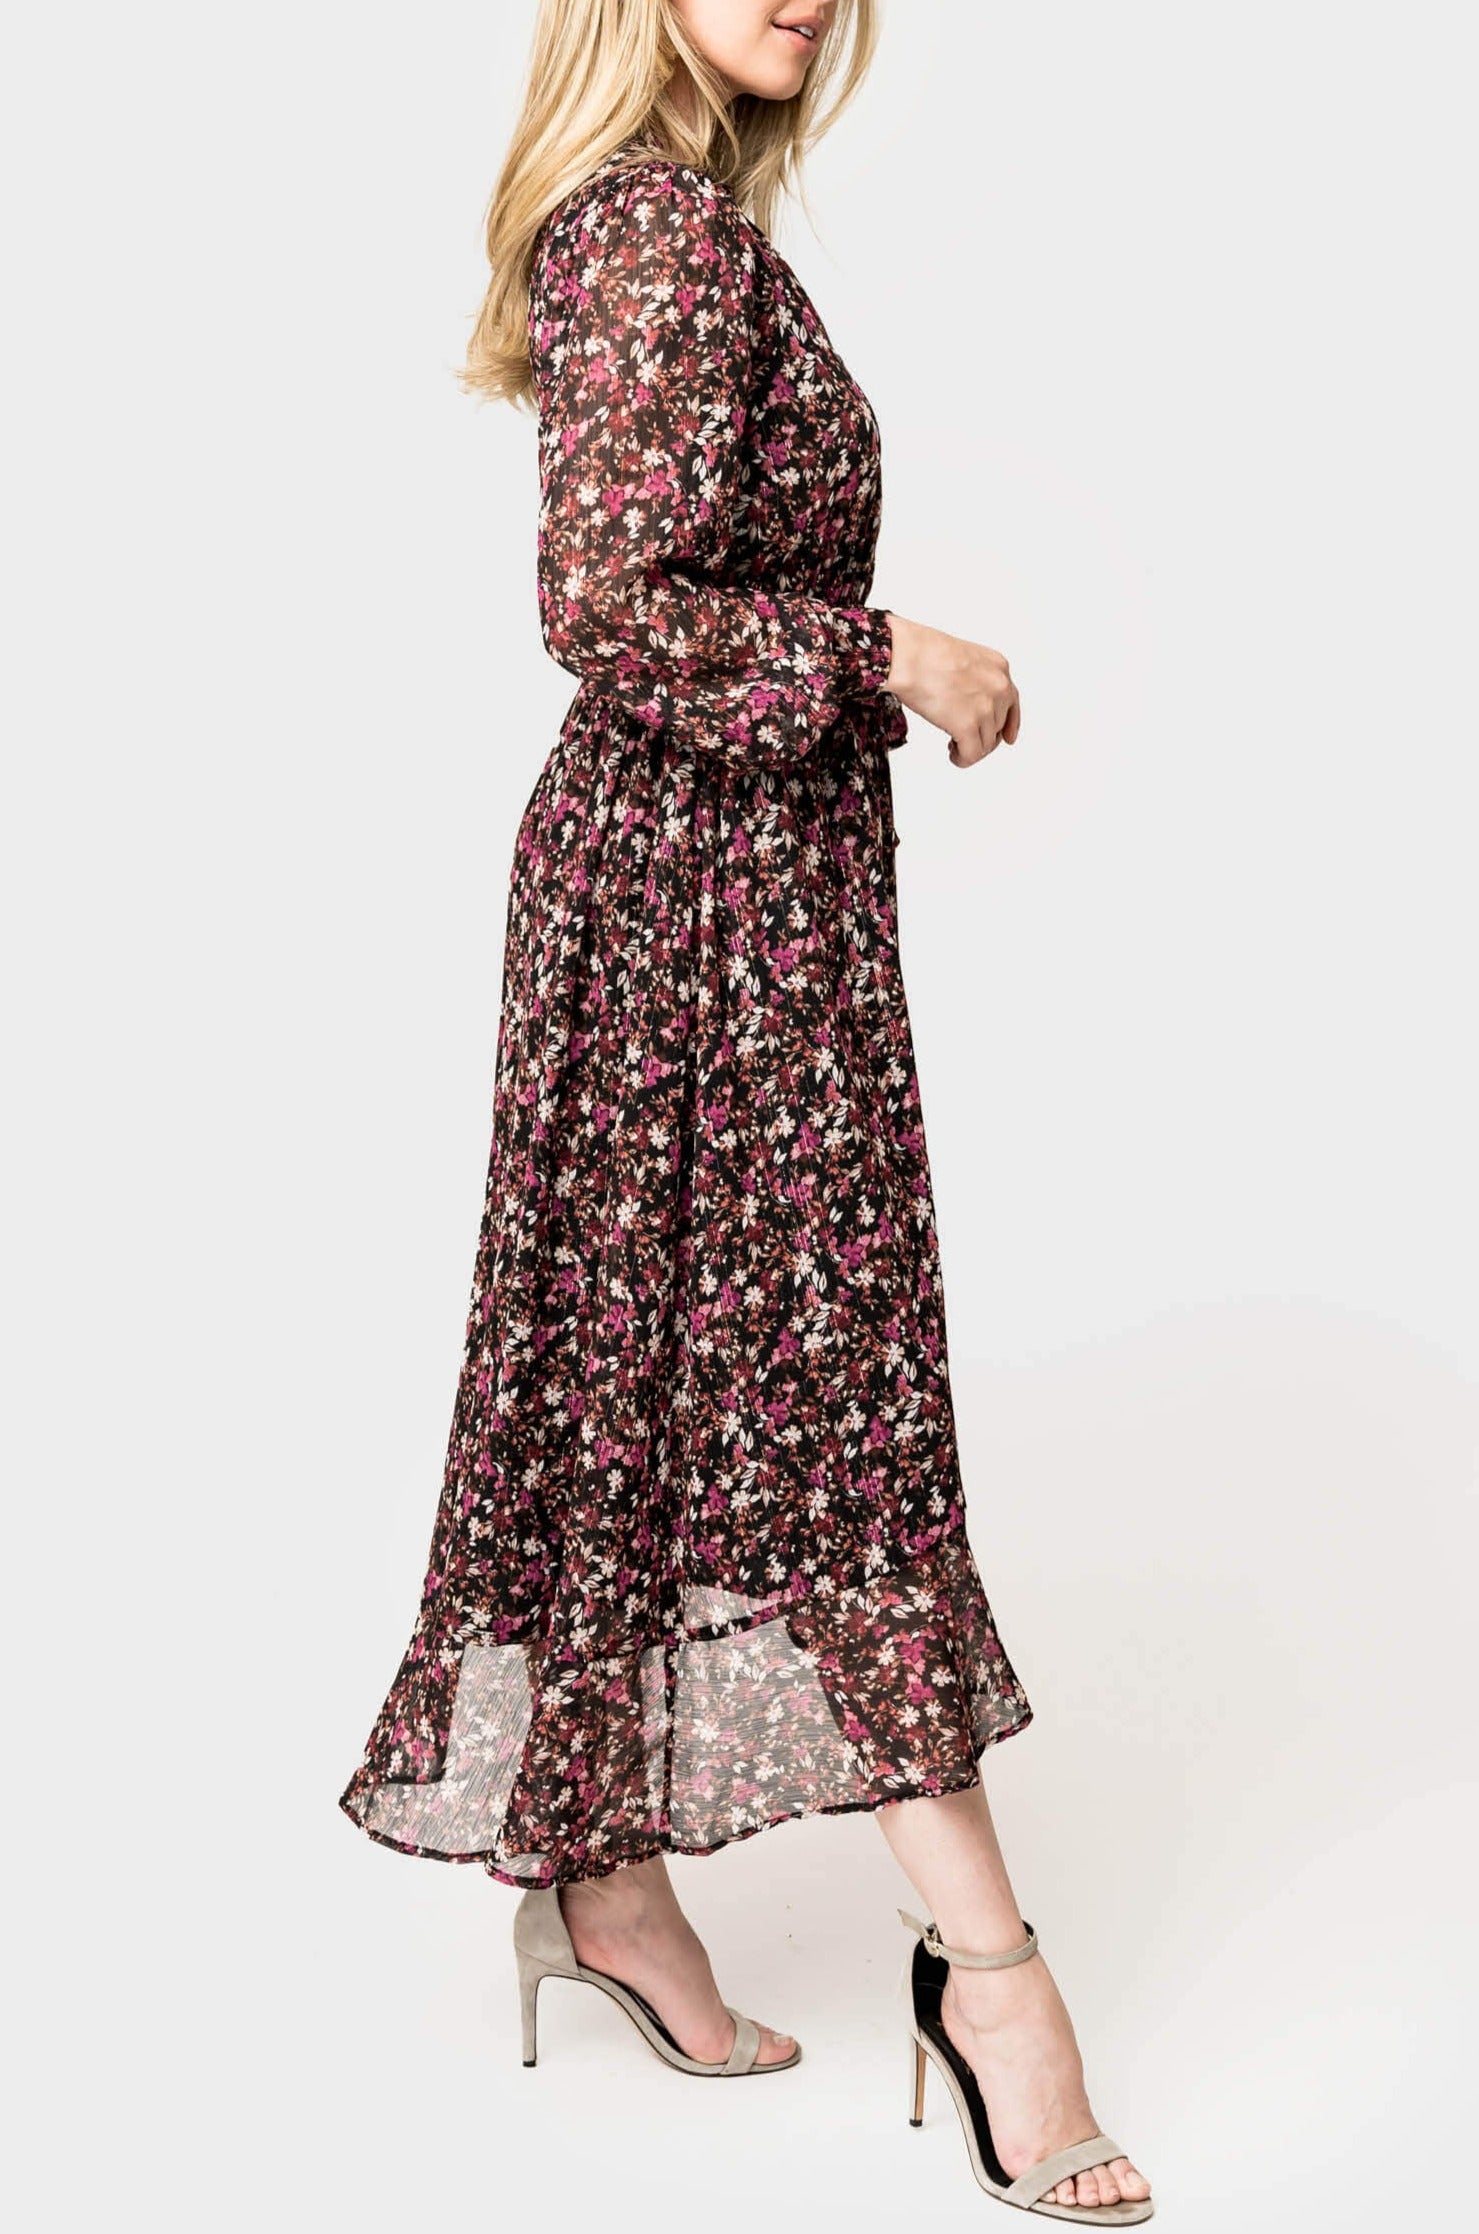 Side of Woman wearing Chiffon Ruffle Hi-Low Maxi Dress in Festive Berry Floral